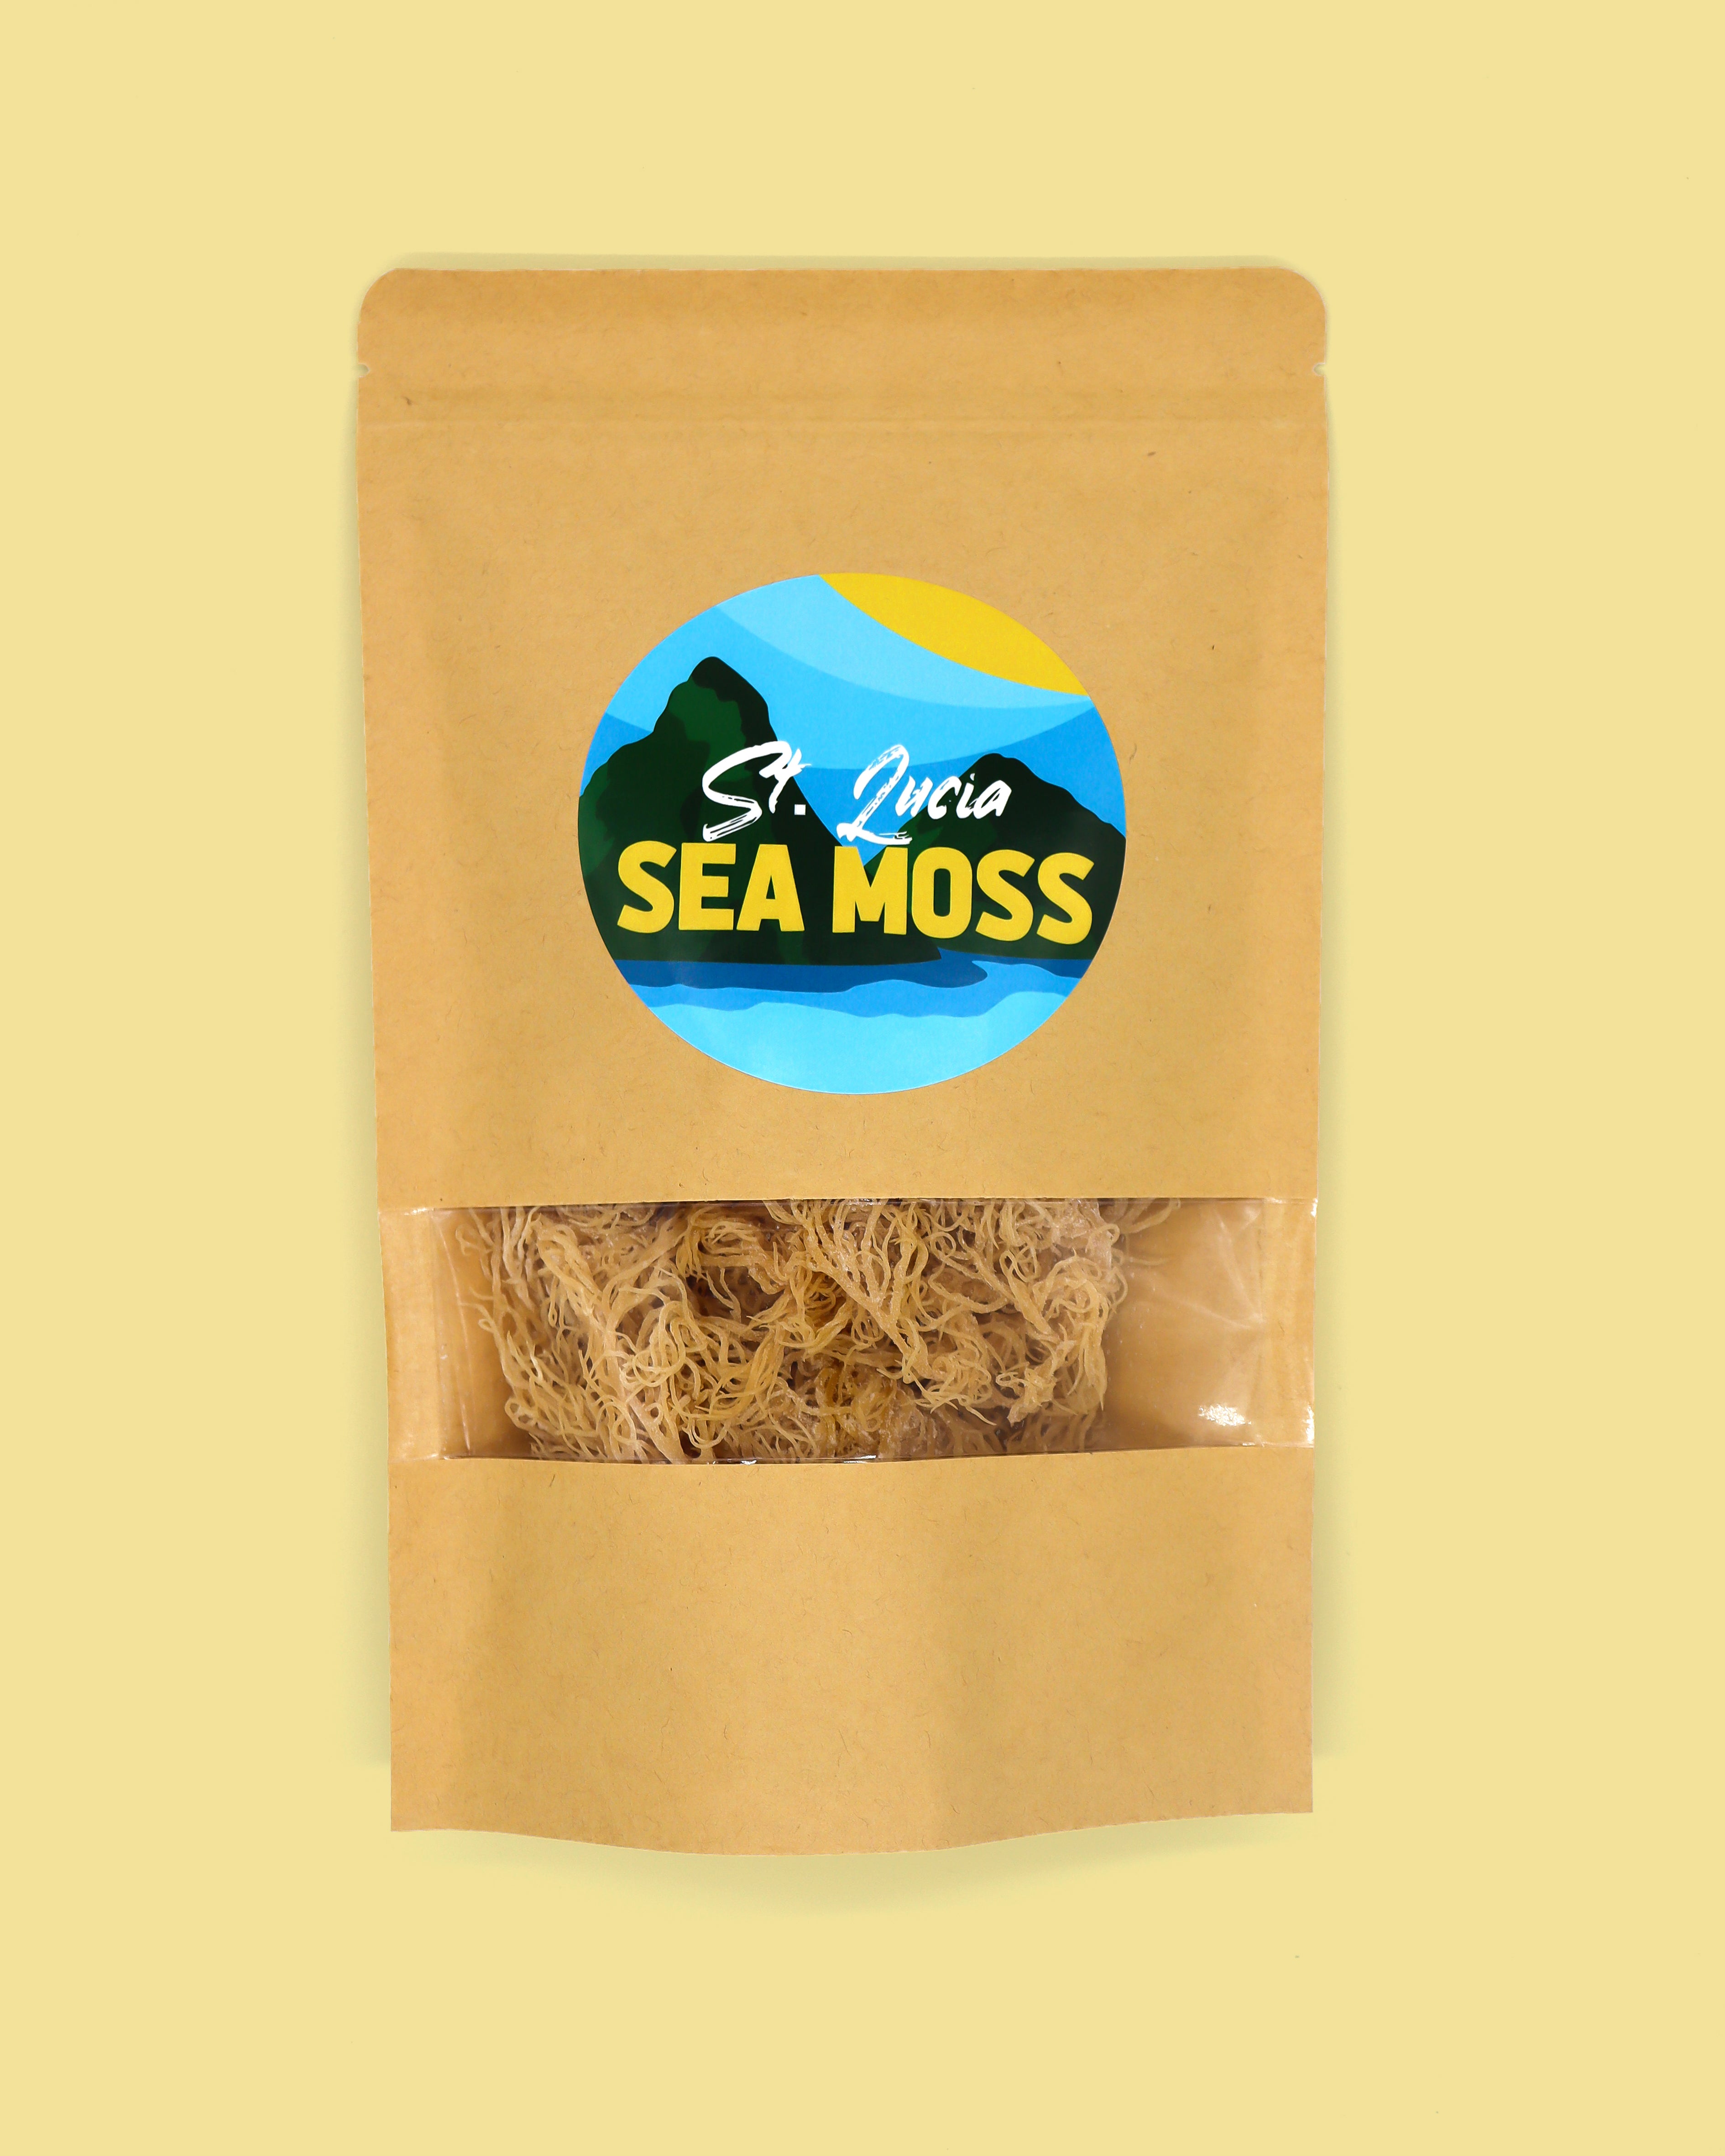 1 x 70g Gold St Lucia Sea Moss - Eucheuma Cottonii - St Lucia Sea Moss Organic Buy UK 